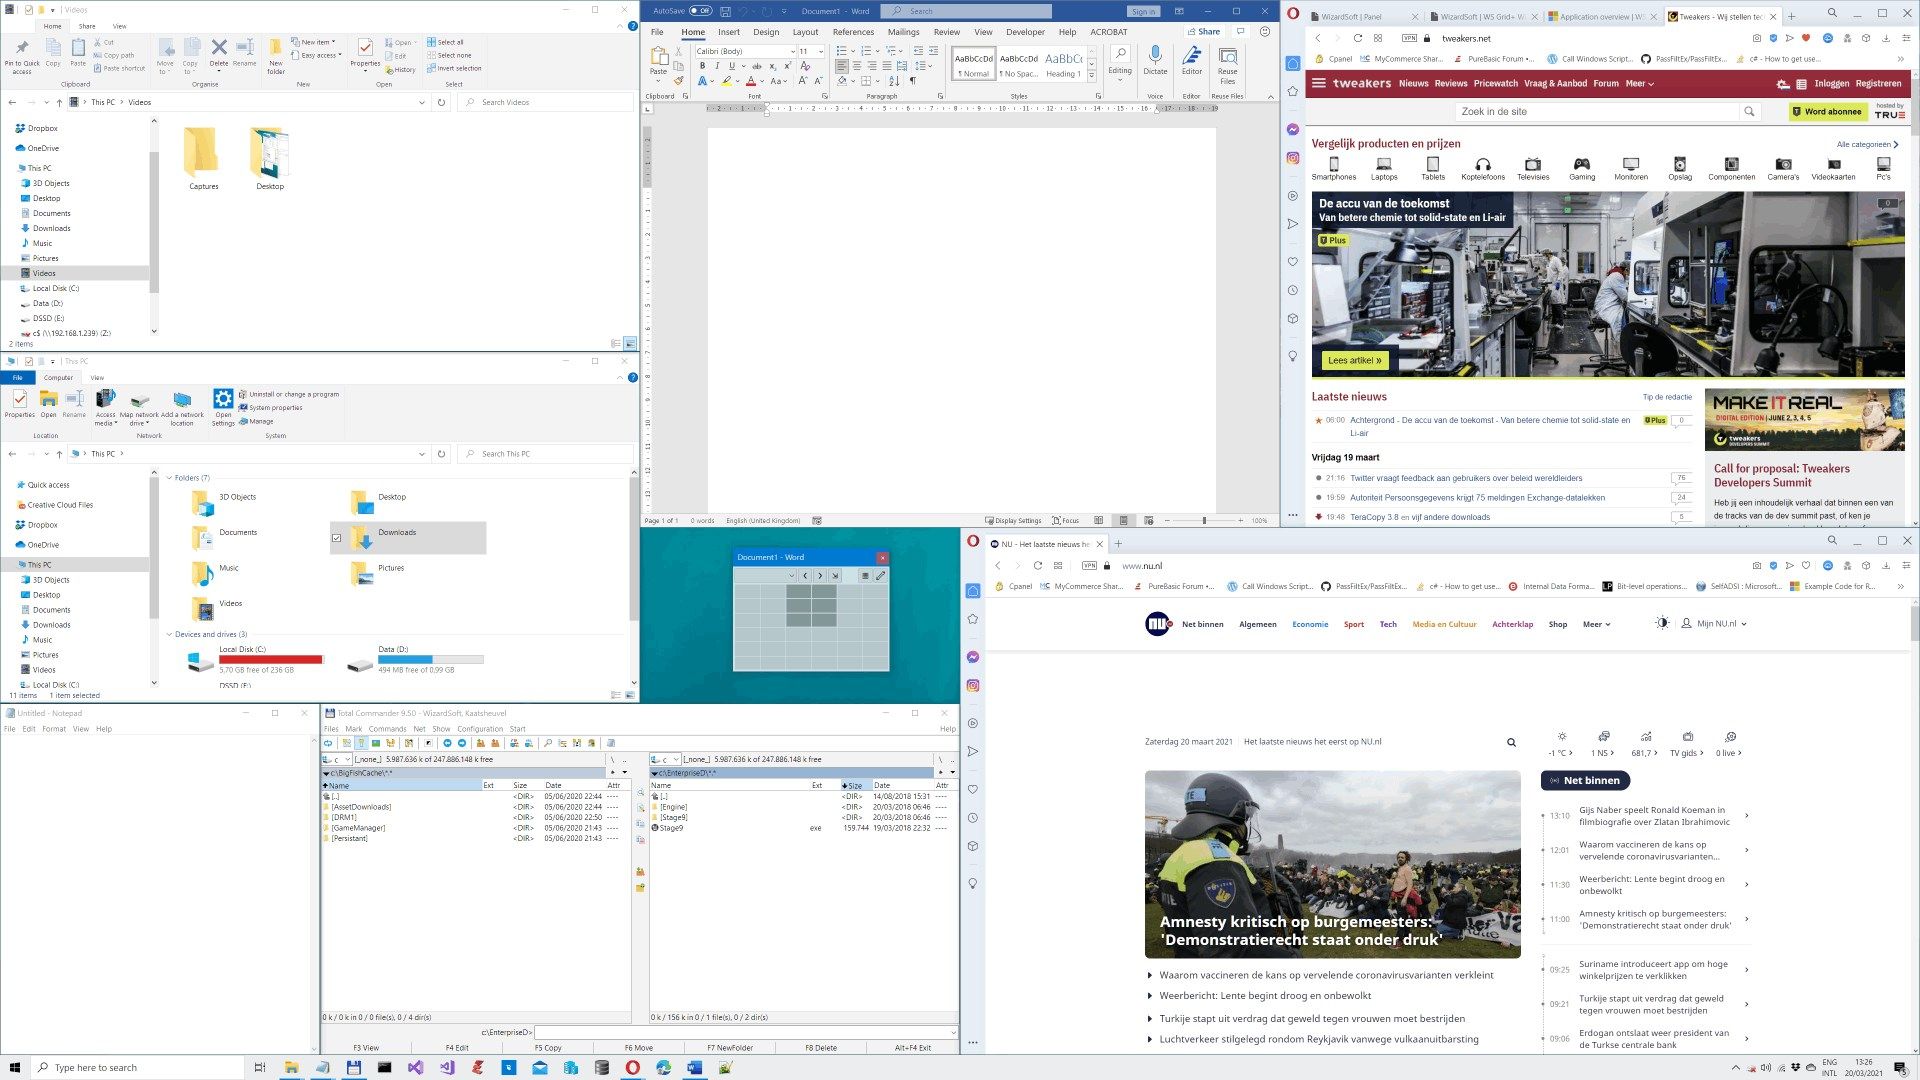 Quickly arrange windows on your desktop